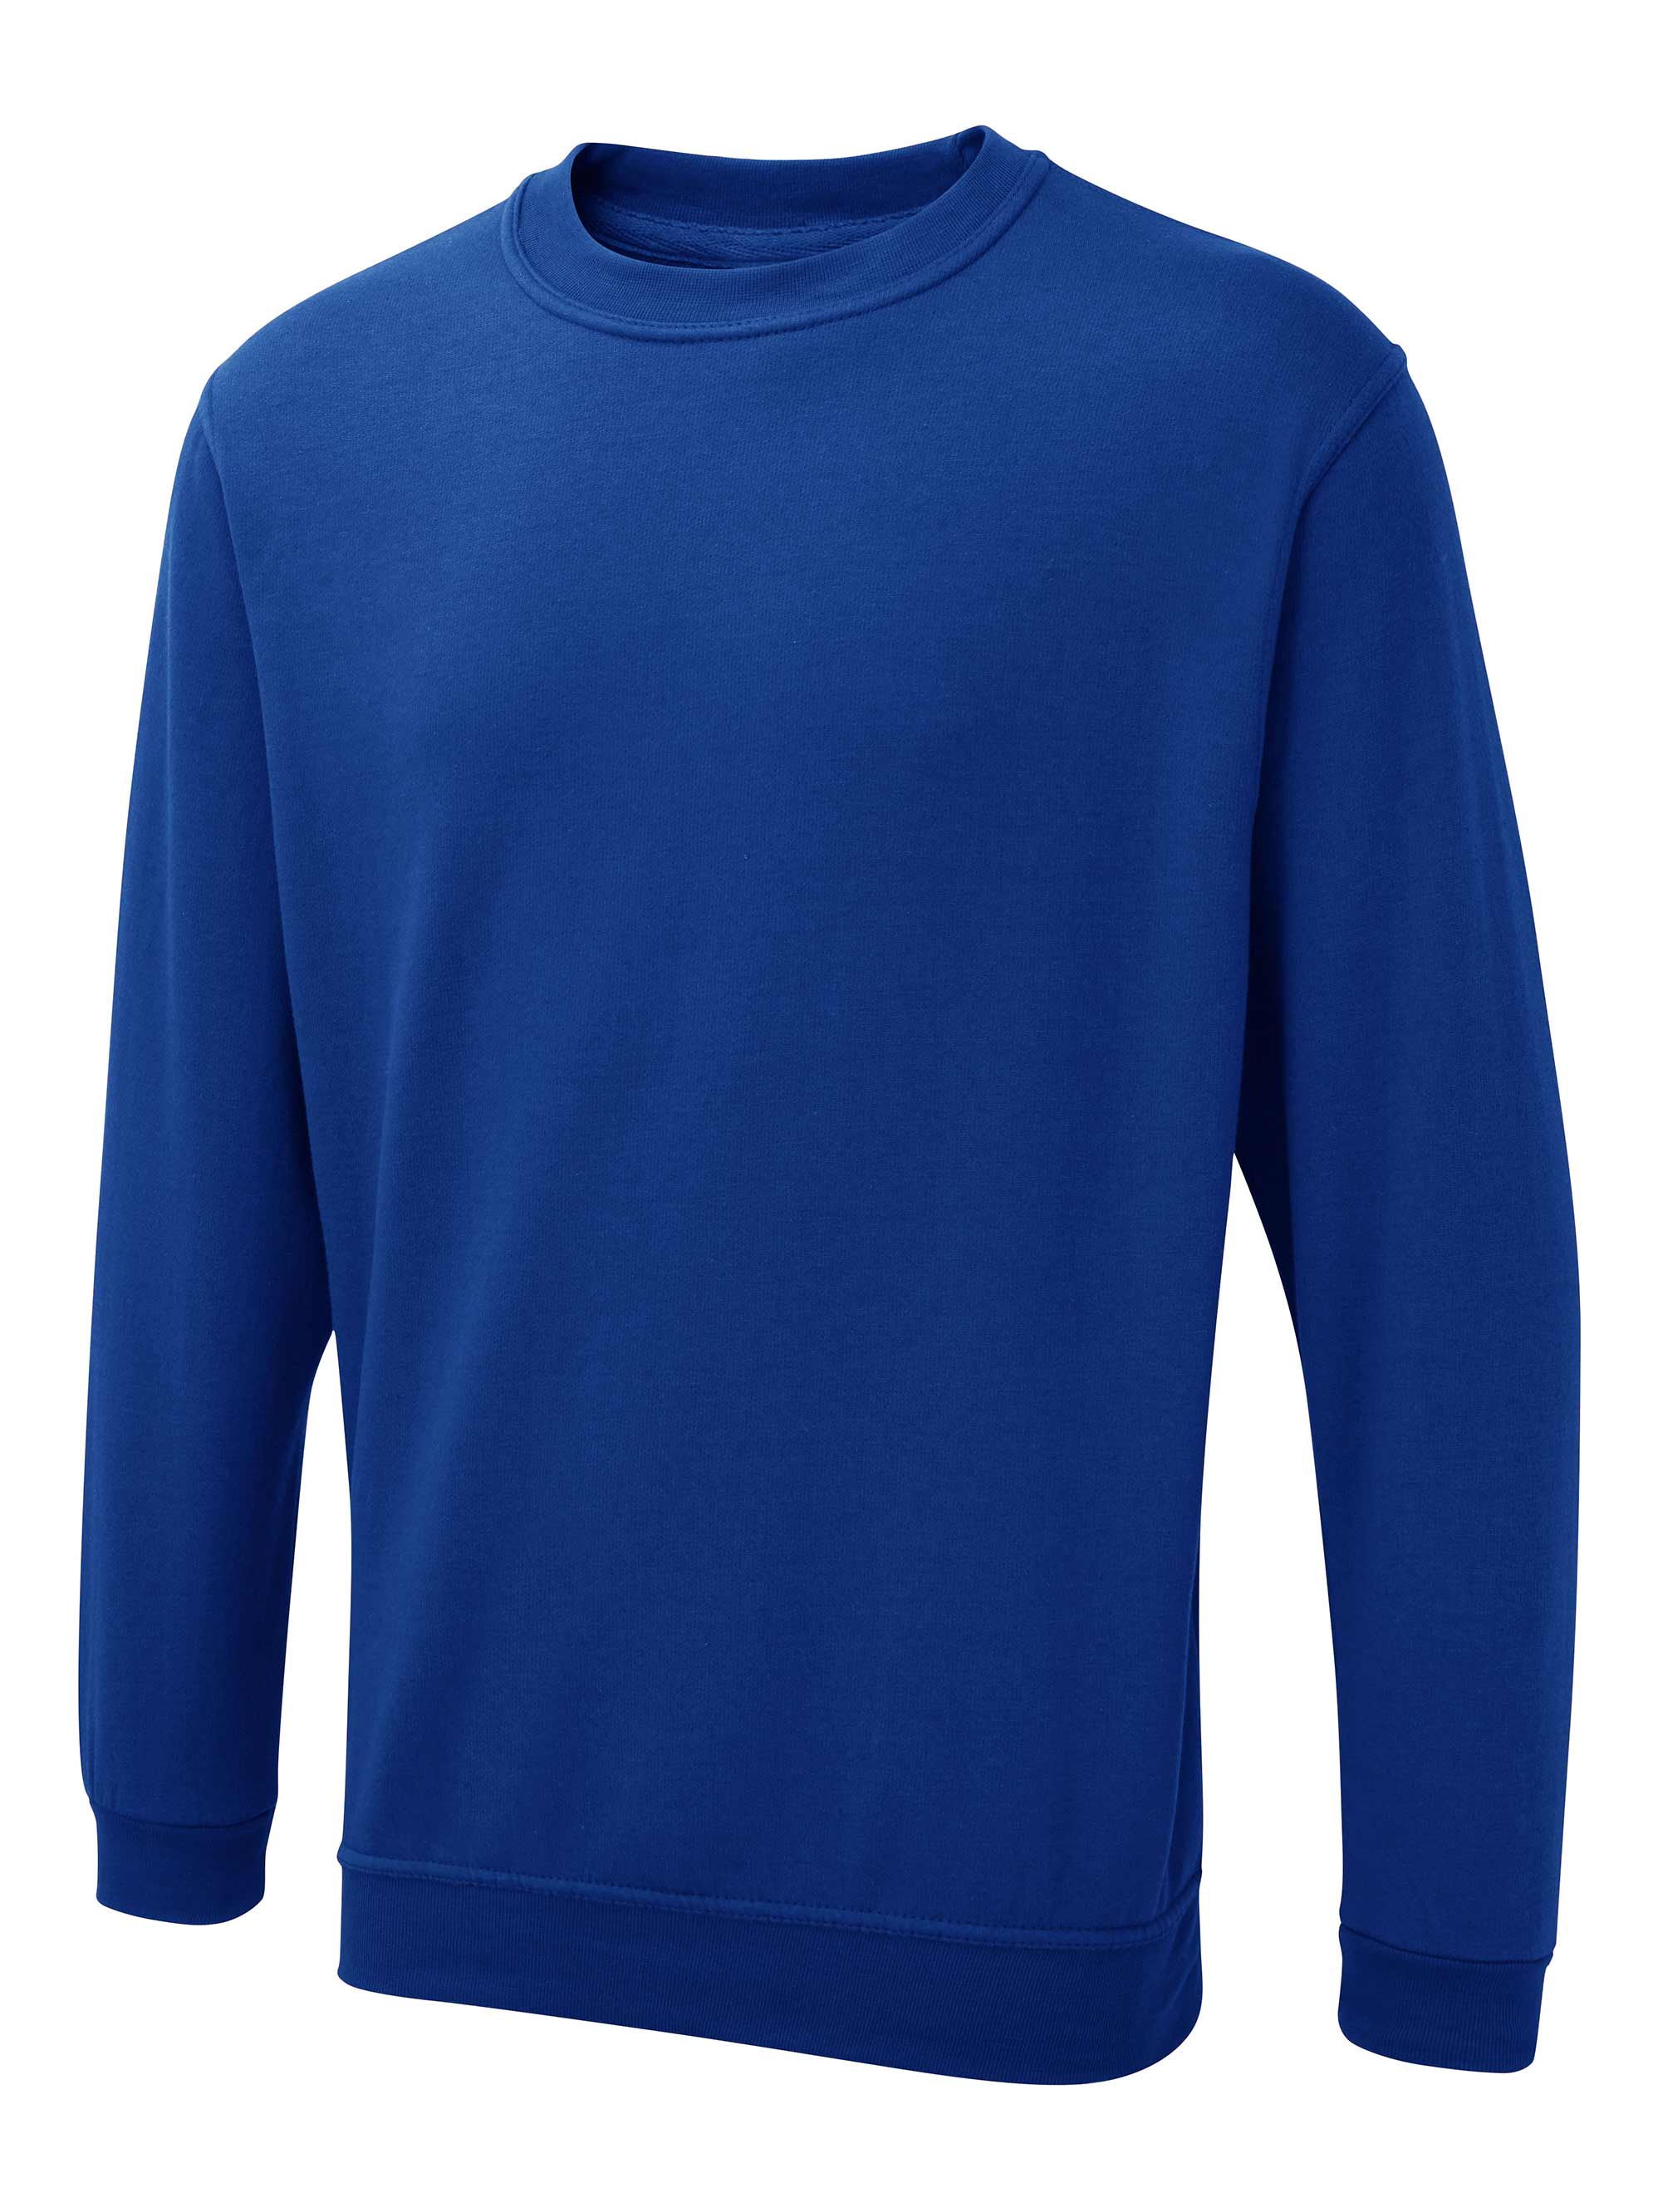 Uneek The UX Sweatshirt - ux3 (Royal)